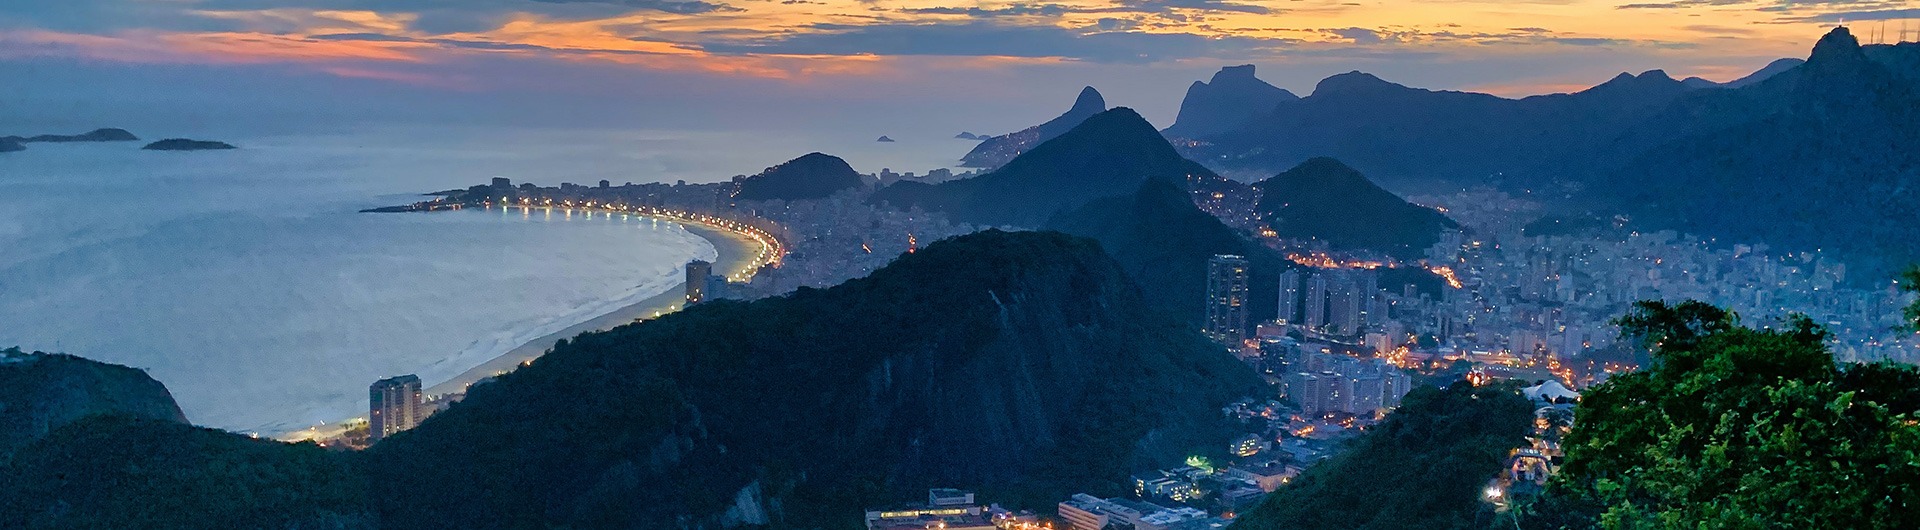 Morro da Urca in Rio de Janeiro, Brazil